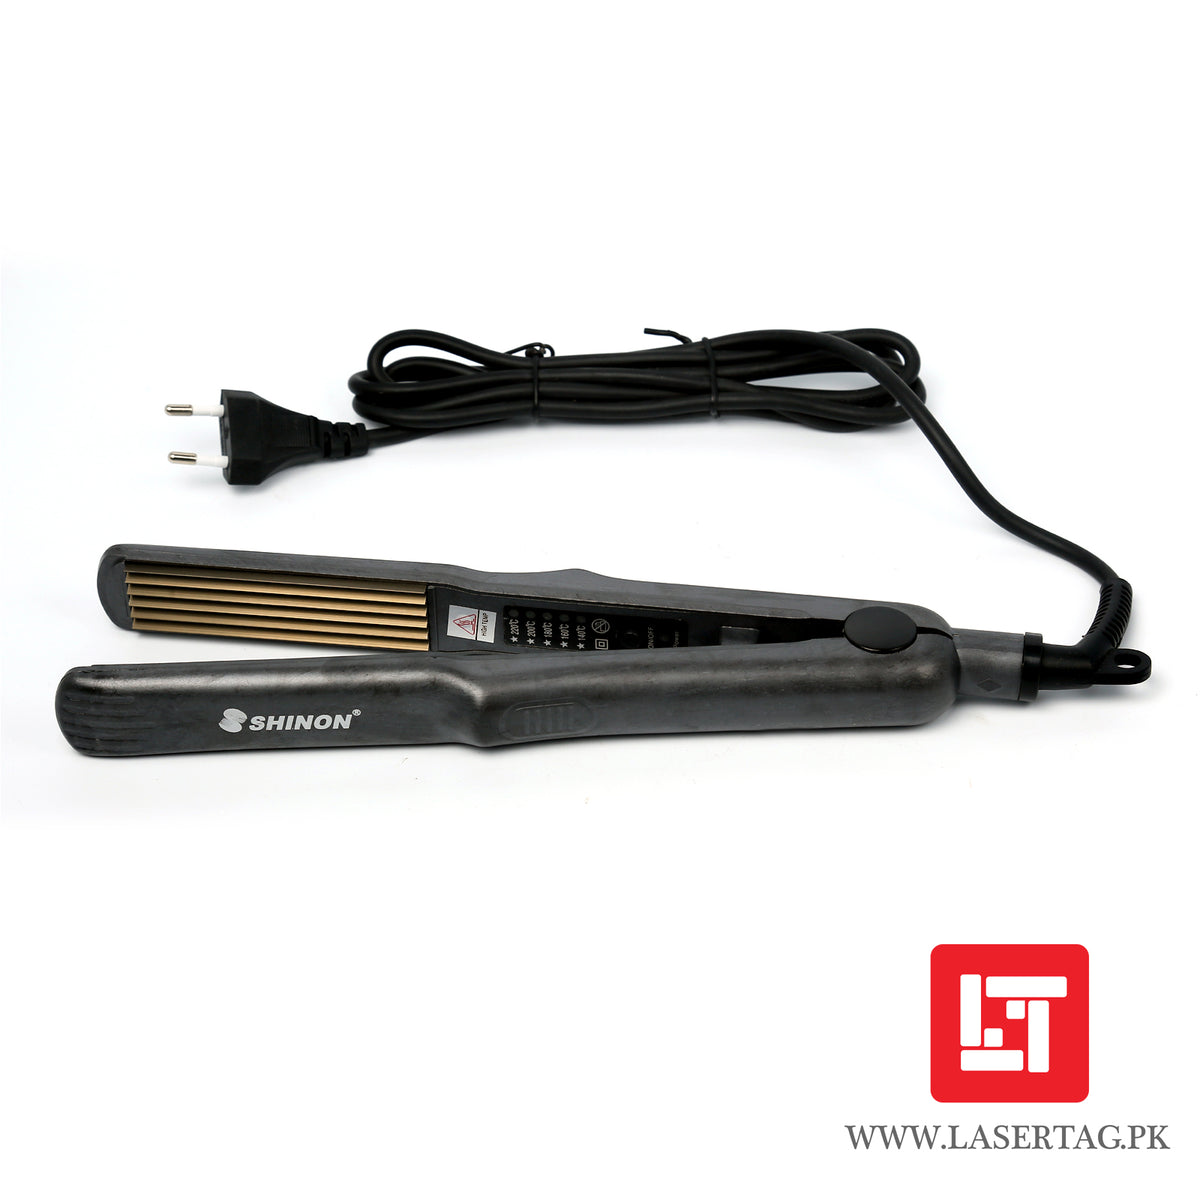 Shinon Ultimate Stylist Hair Crimper Iron Model 525 Temperature 220C freeshipping - lasertag.pk